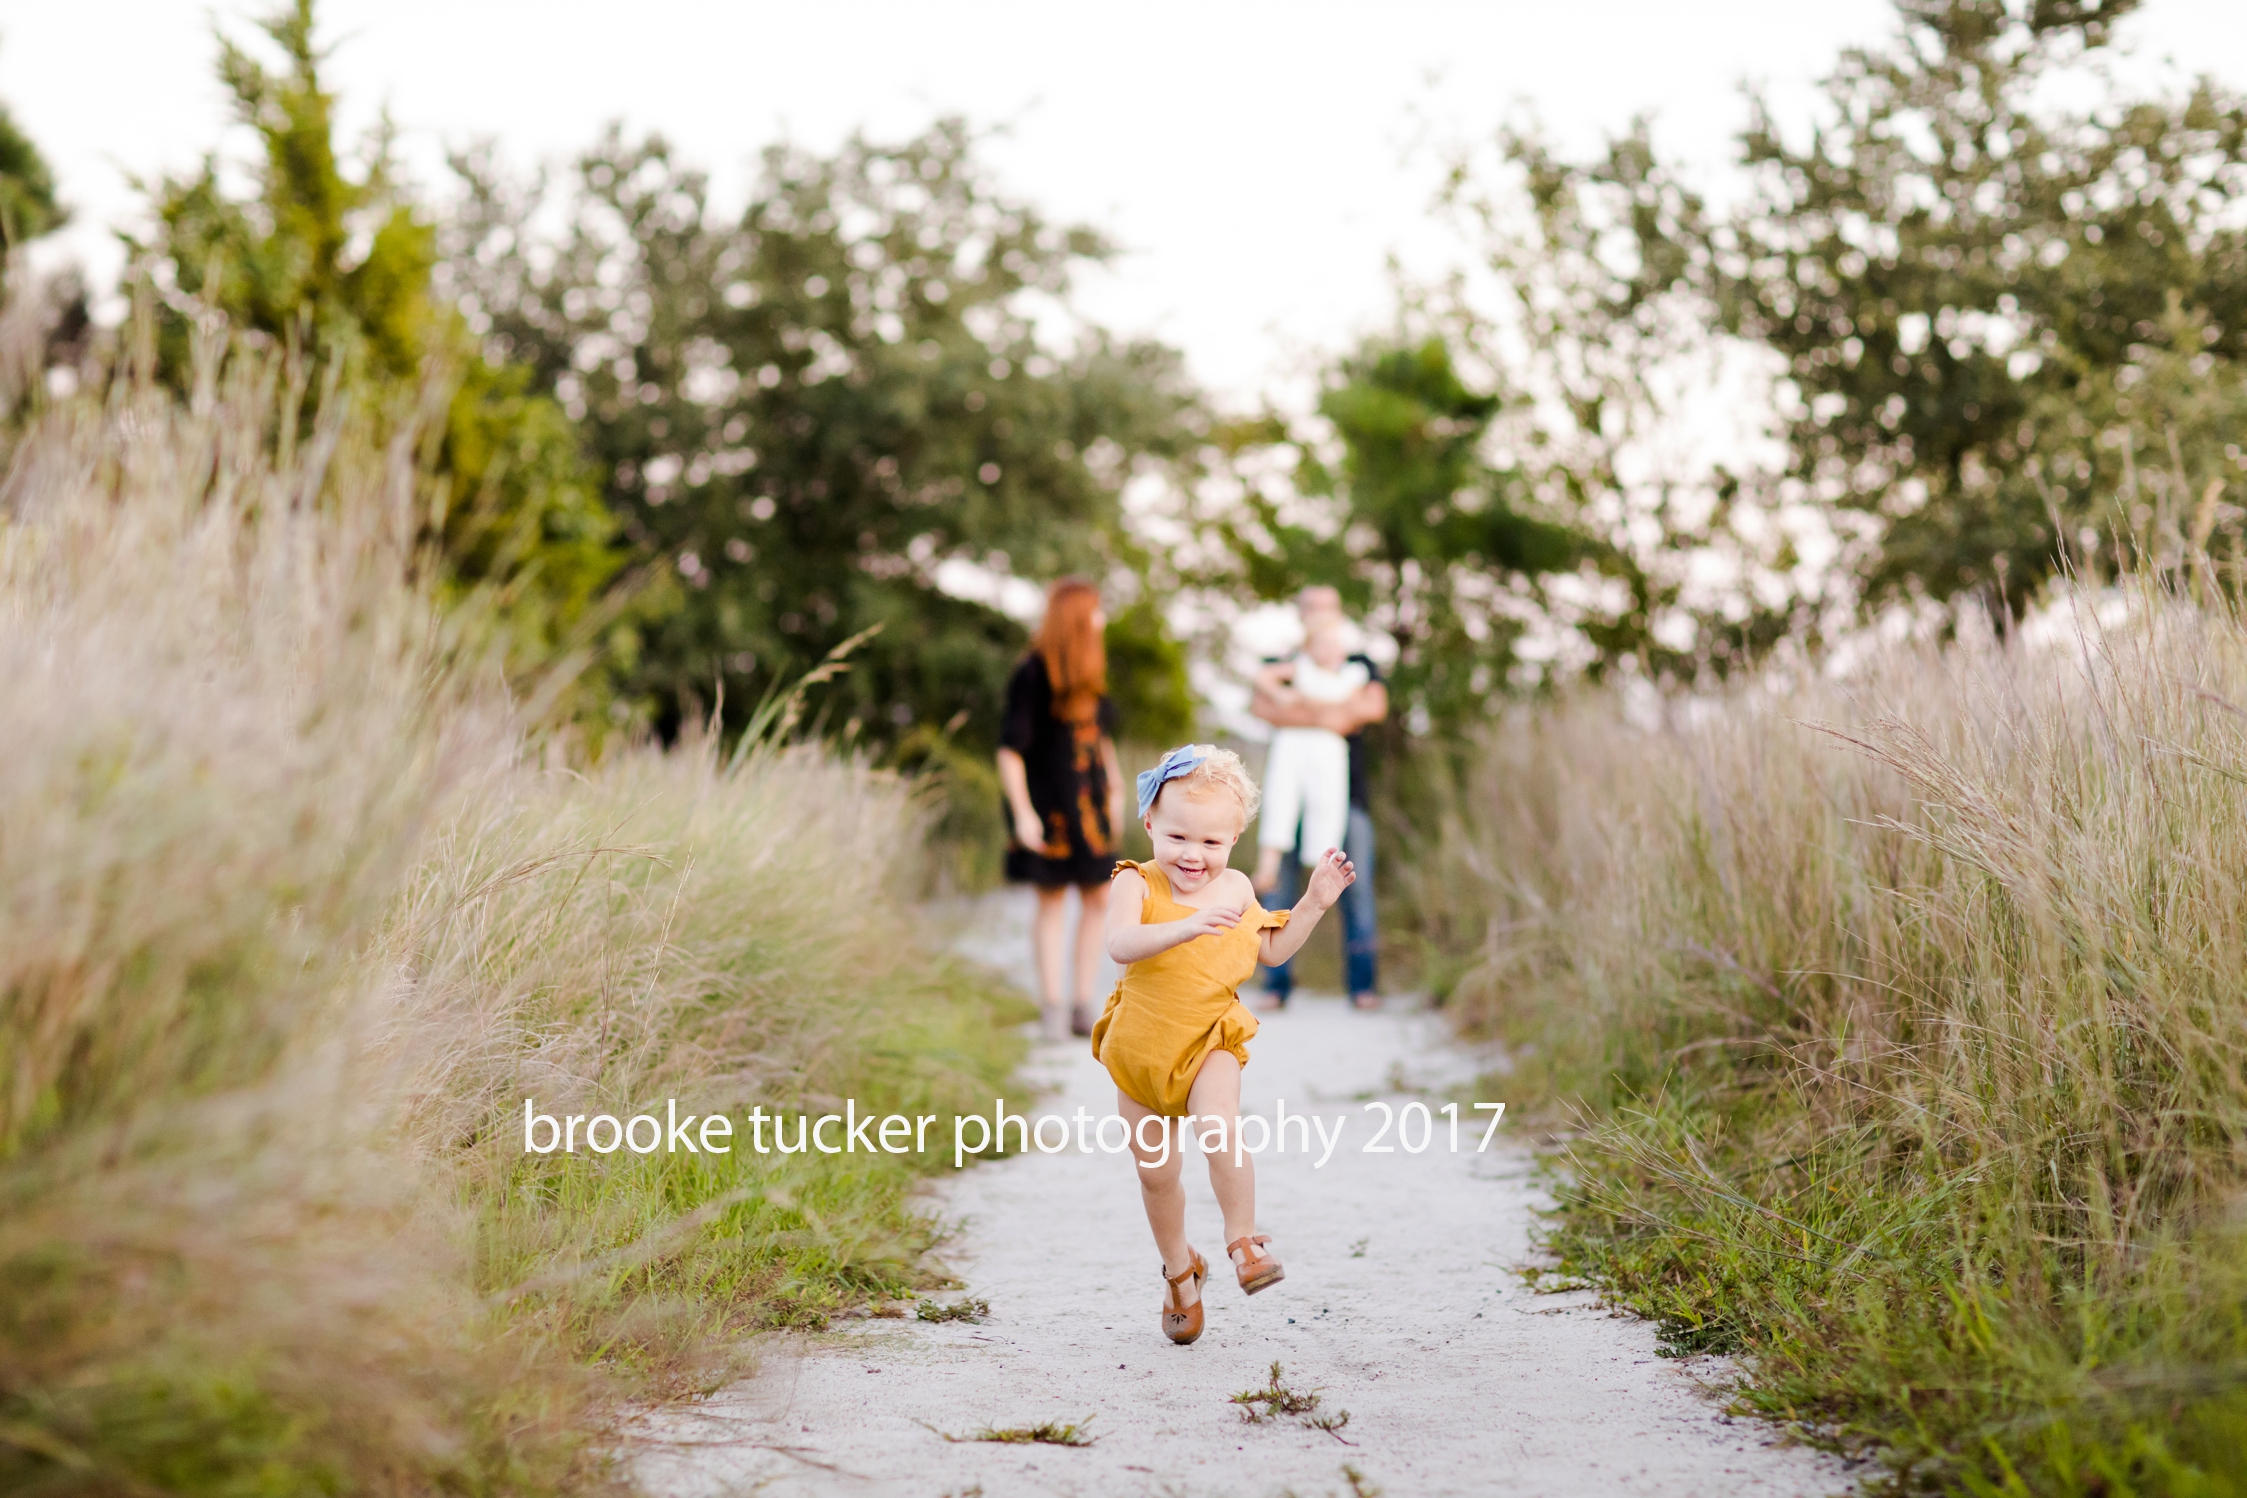 Beautiful outdoor family portraits, Virginia Child and Family photographer brooke tucker